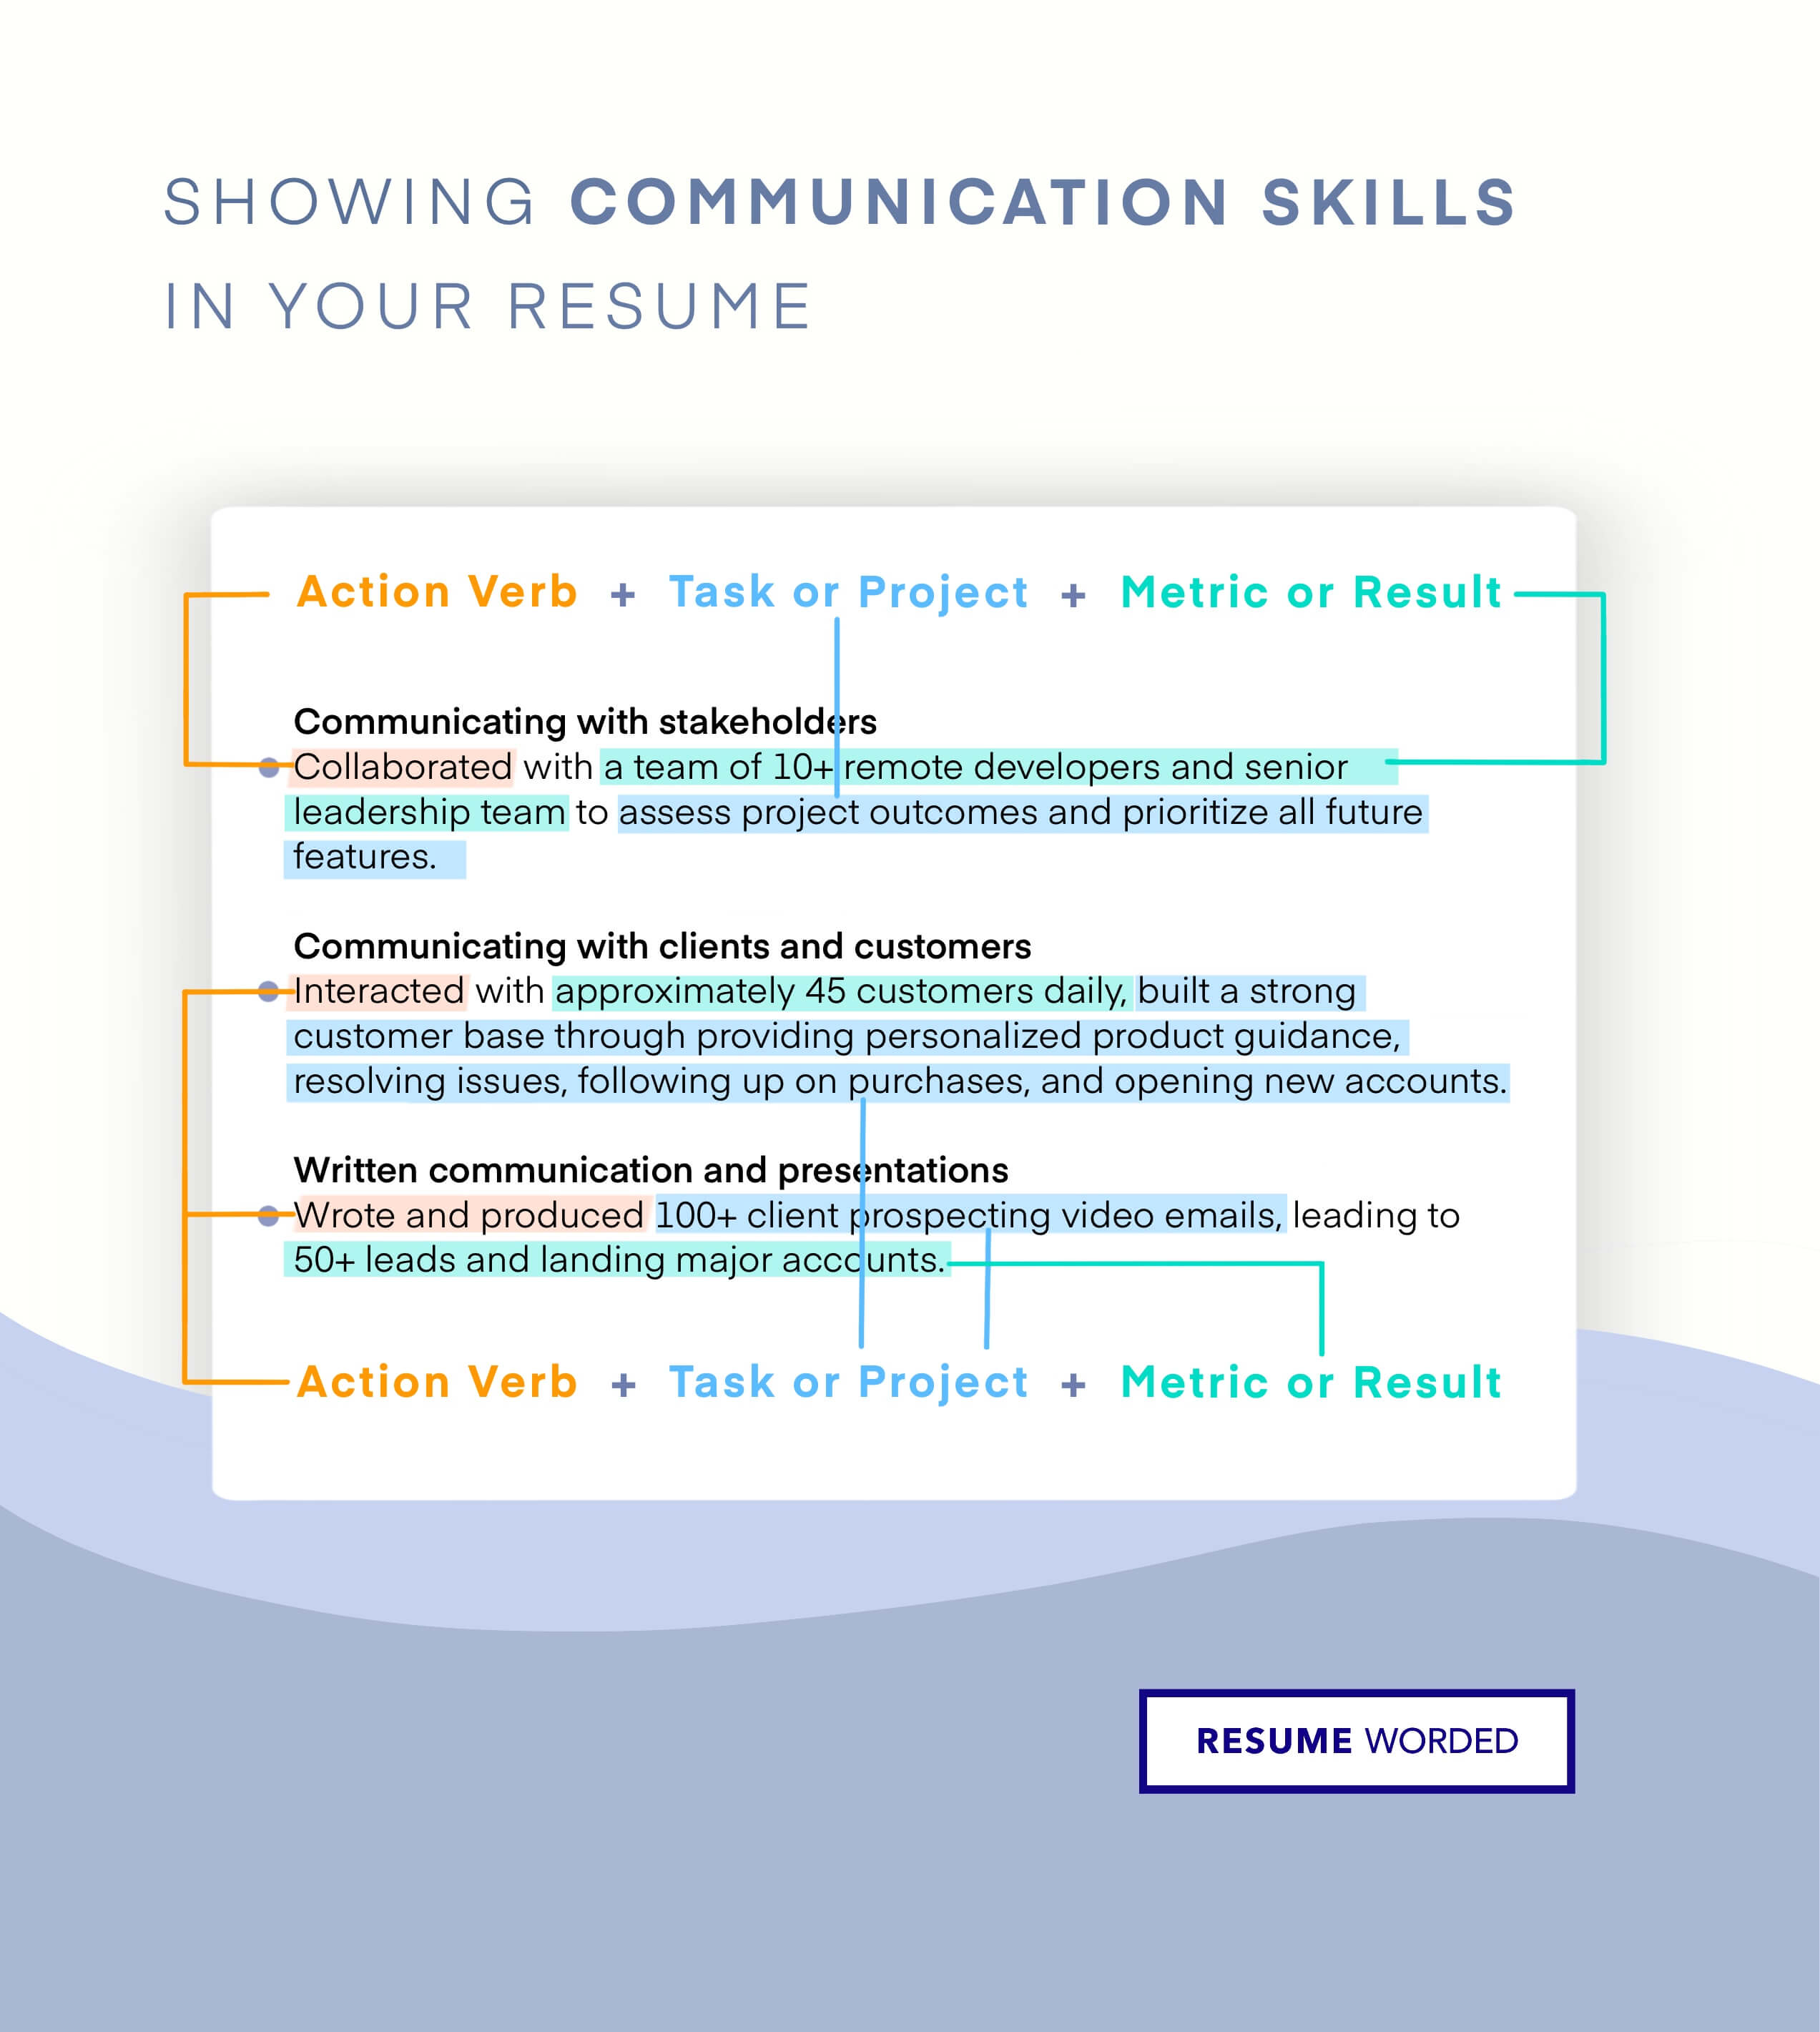 Highlight your communication skills - Application Support Engineer CV